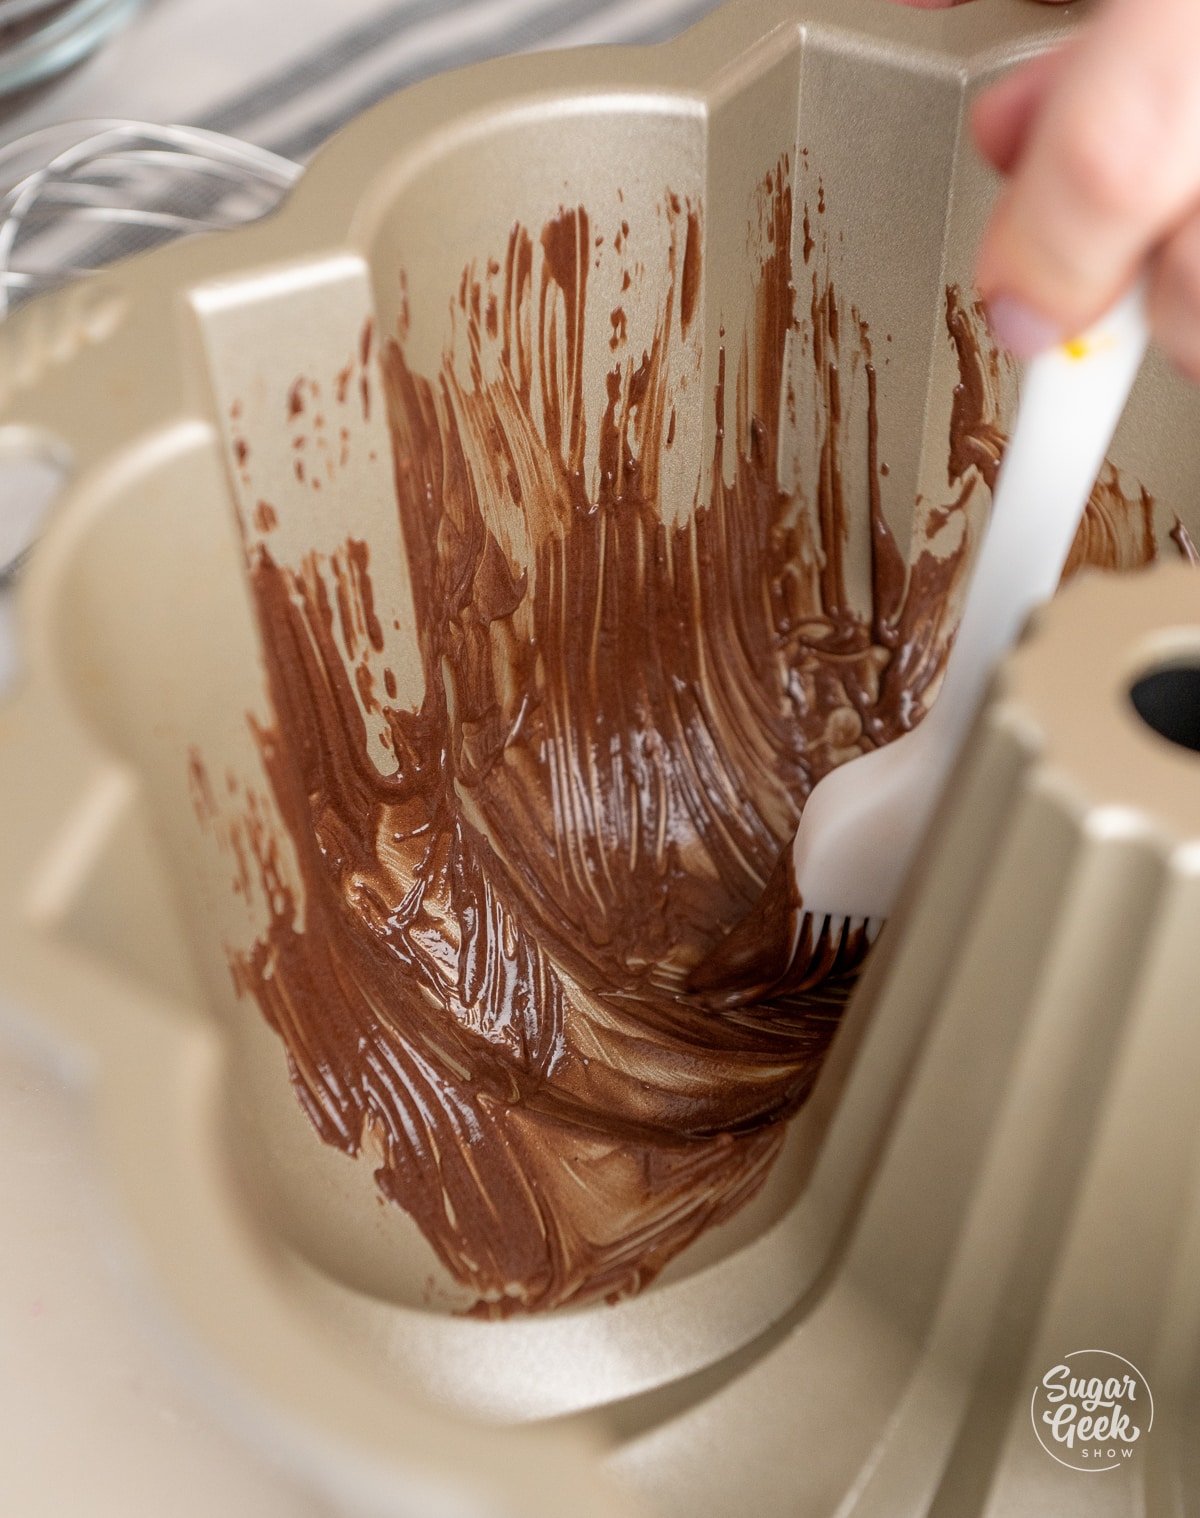 hand brushing chocolate cake goop into a bundt cake pan